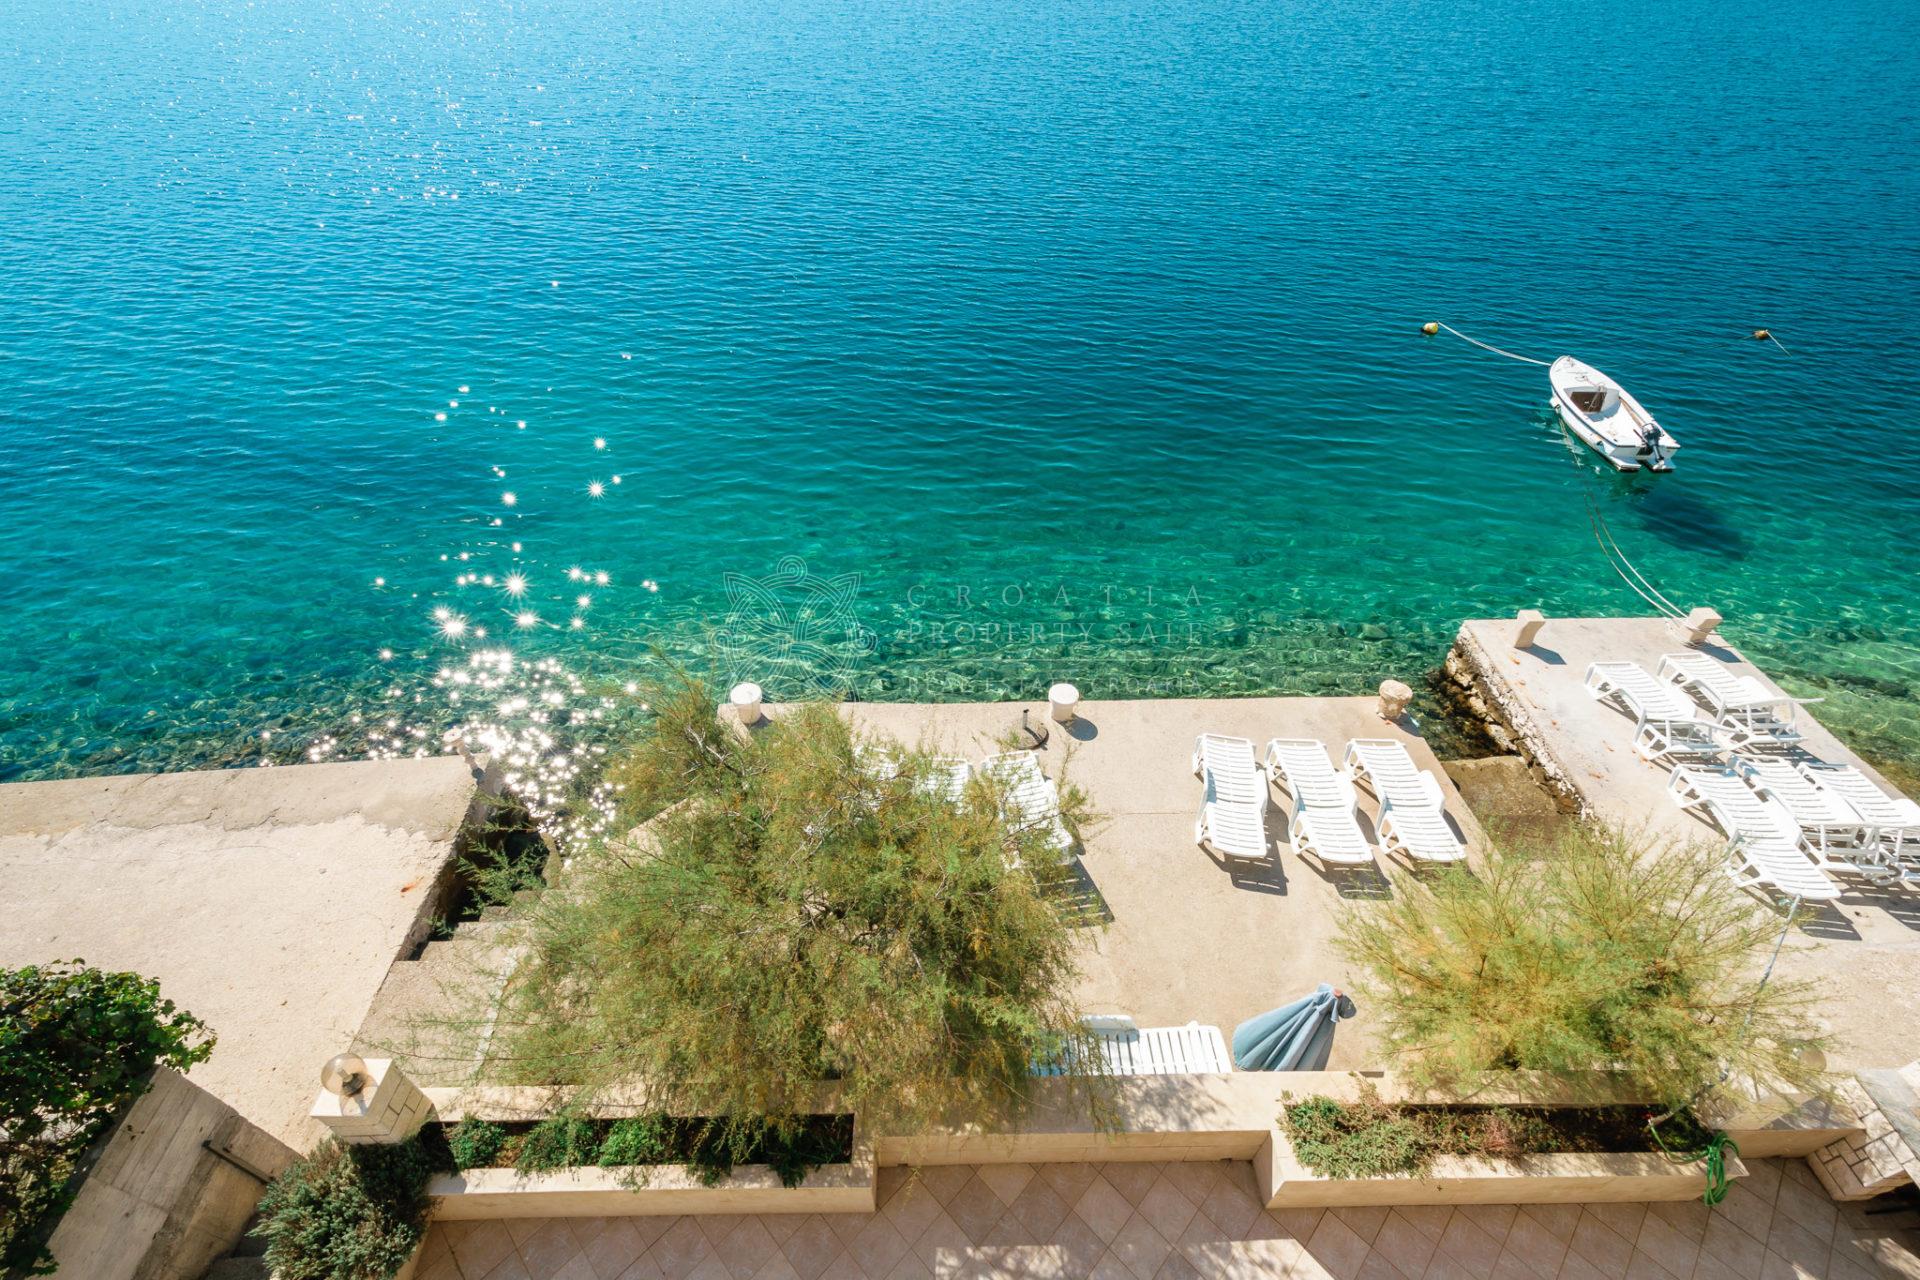 Croatia Klek waterfront house for sale